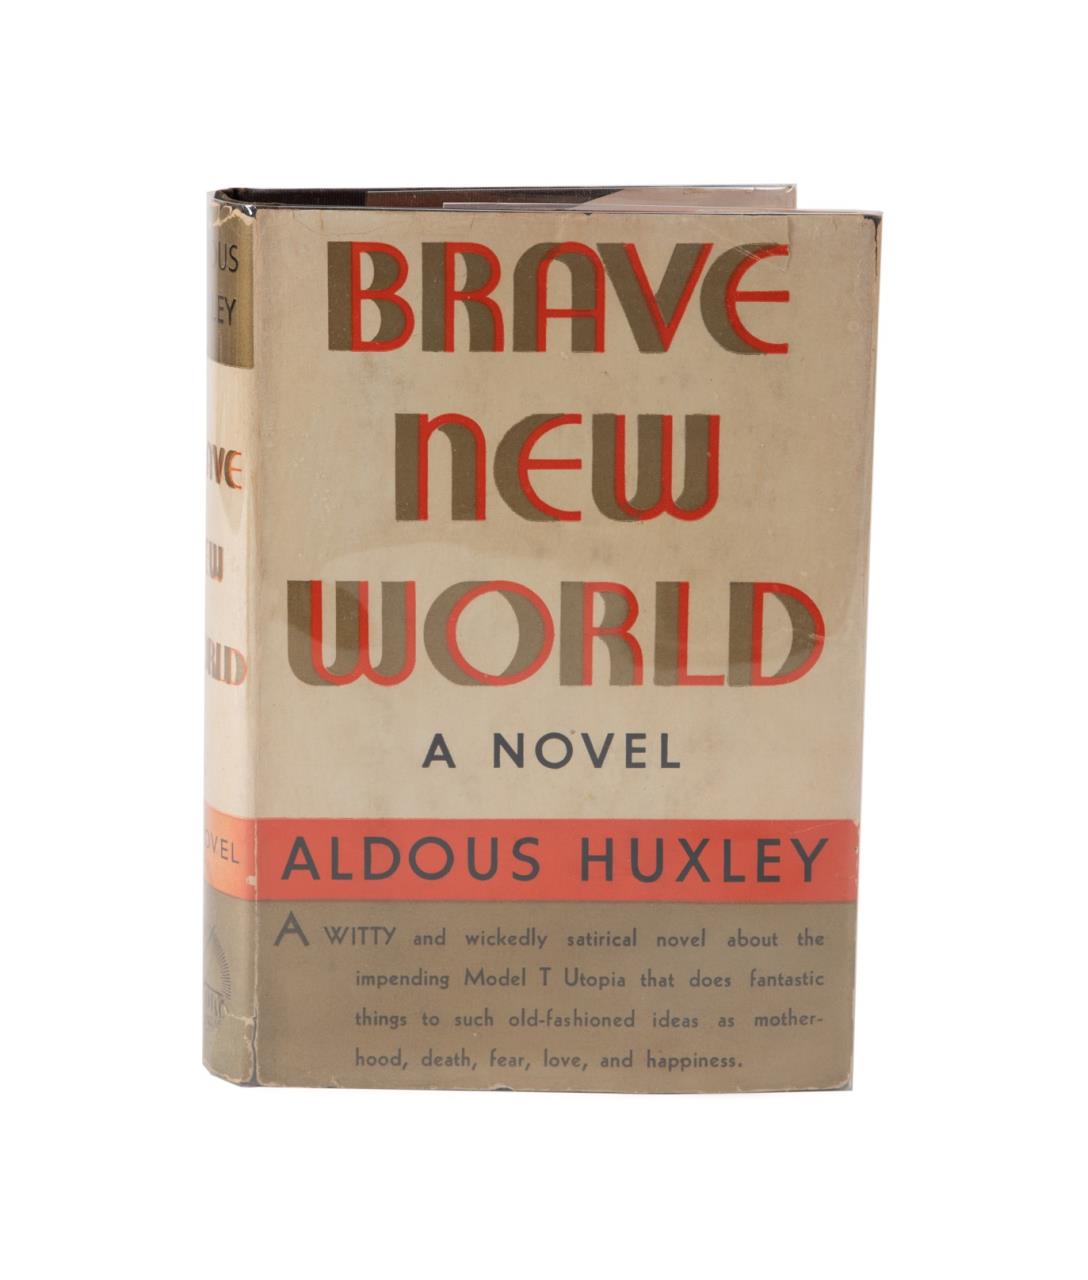 ALDOUS HUXLEY, "BRAVE NEW WORLD",